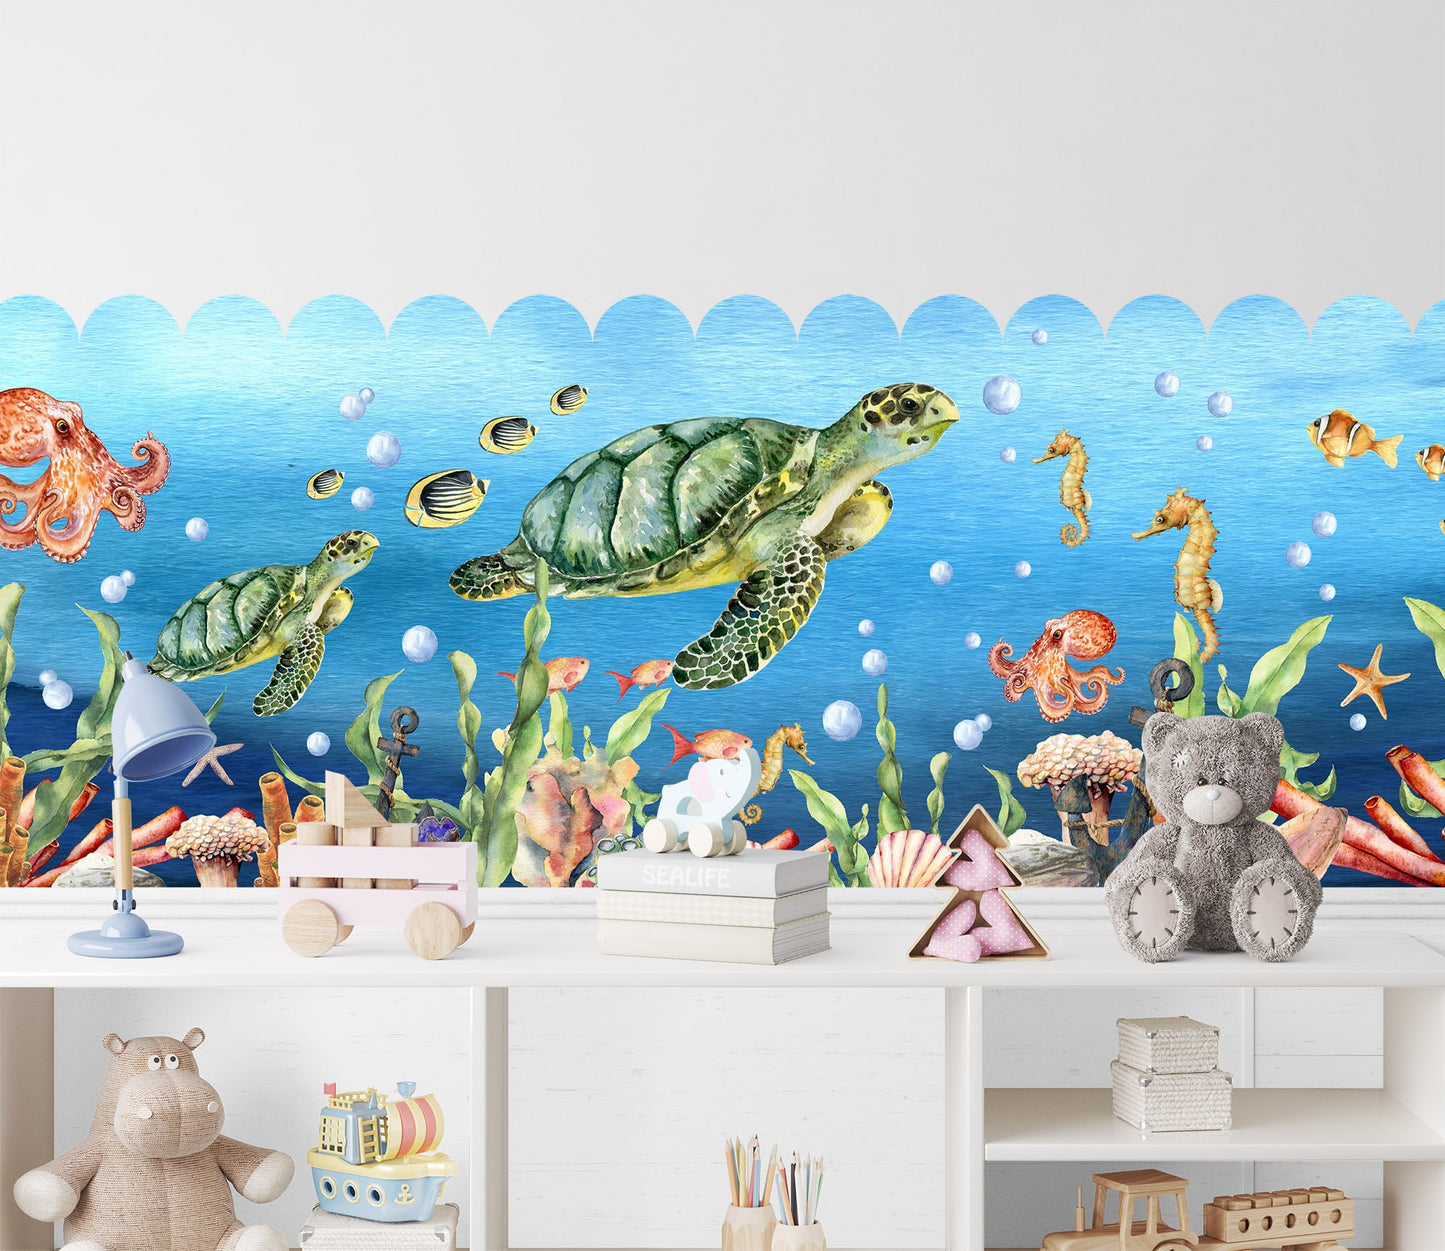 Cartoon Underwater Fabric Wall Mural - Adorable Sea Creatures, Turtles, Octopuses, Seahorses Swimming in Beautiful Watercolor - WM033